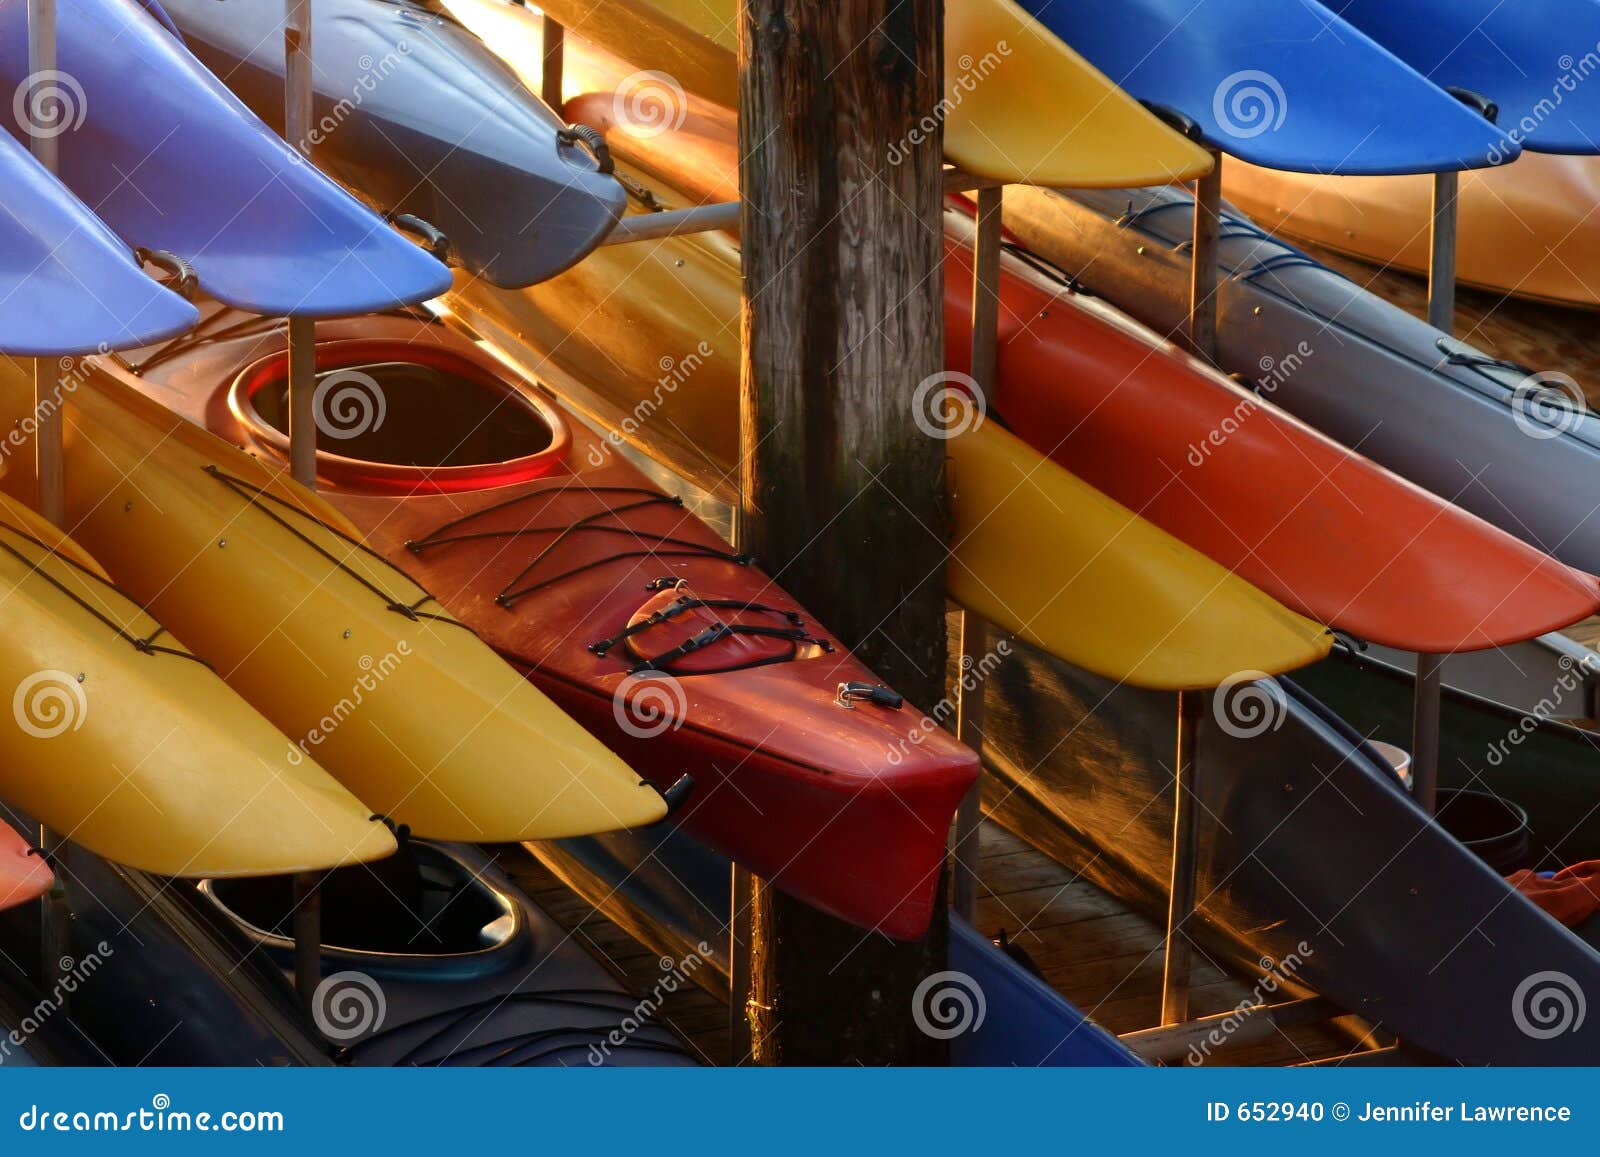 354 Kayak Storage Stock Photos - Free & Royalty-Free Stock Photos from  Dreamstime